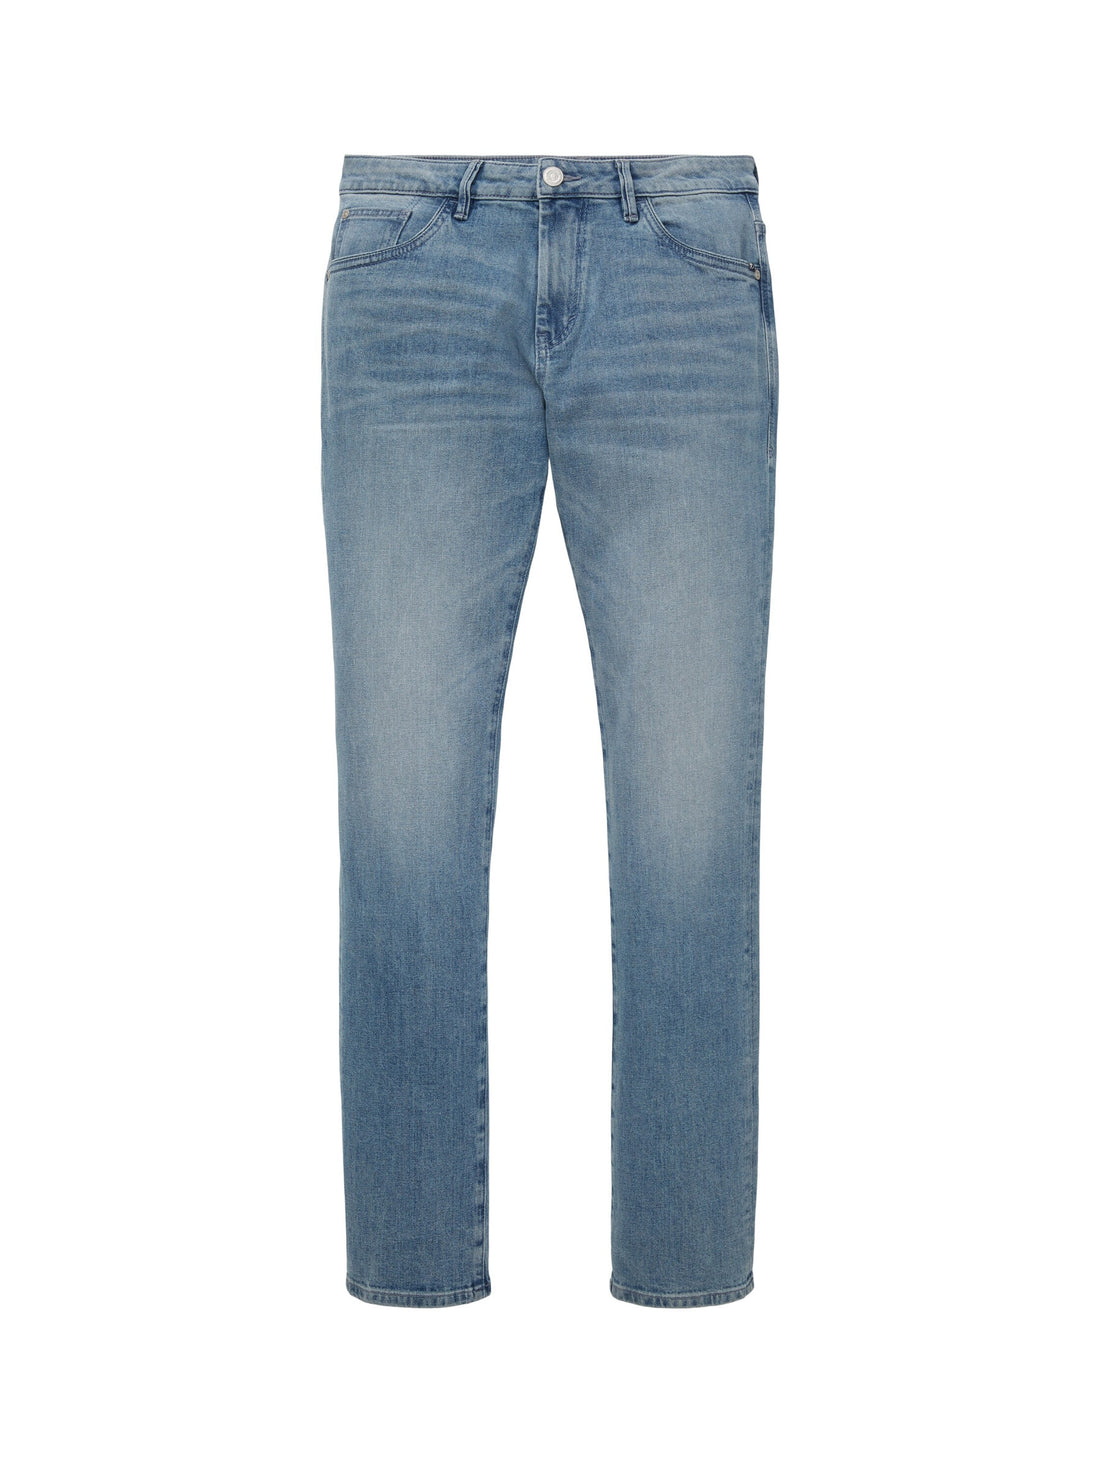 Standard Fit Jeans_1035878_10118_01